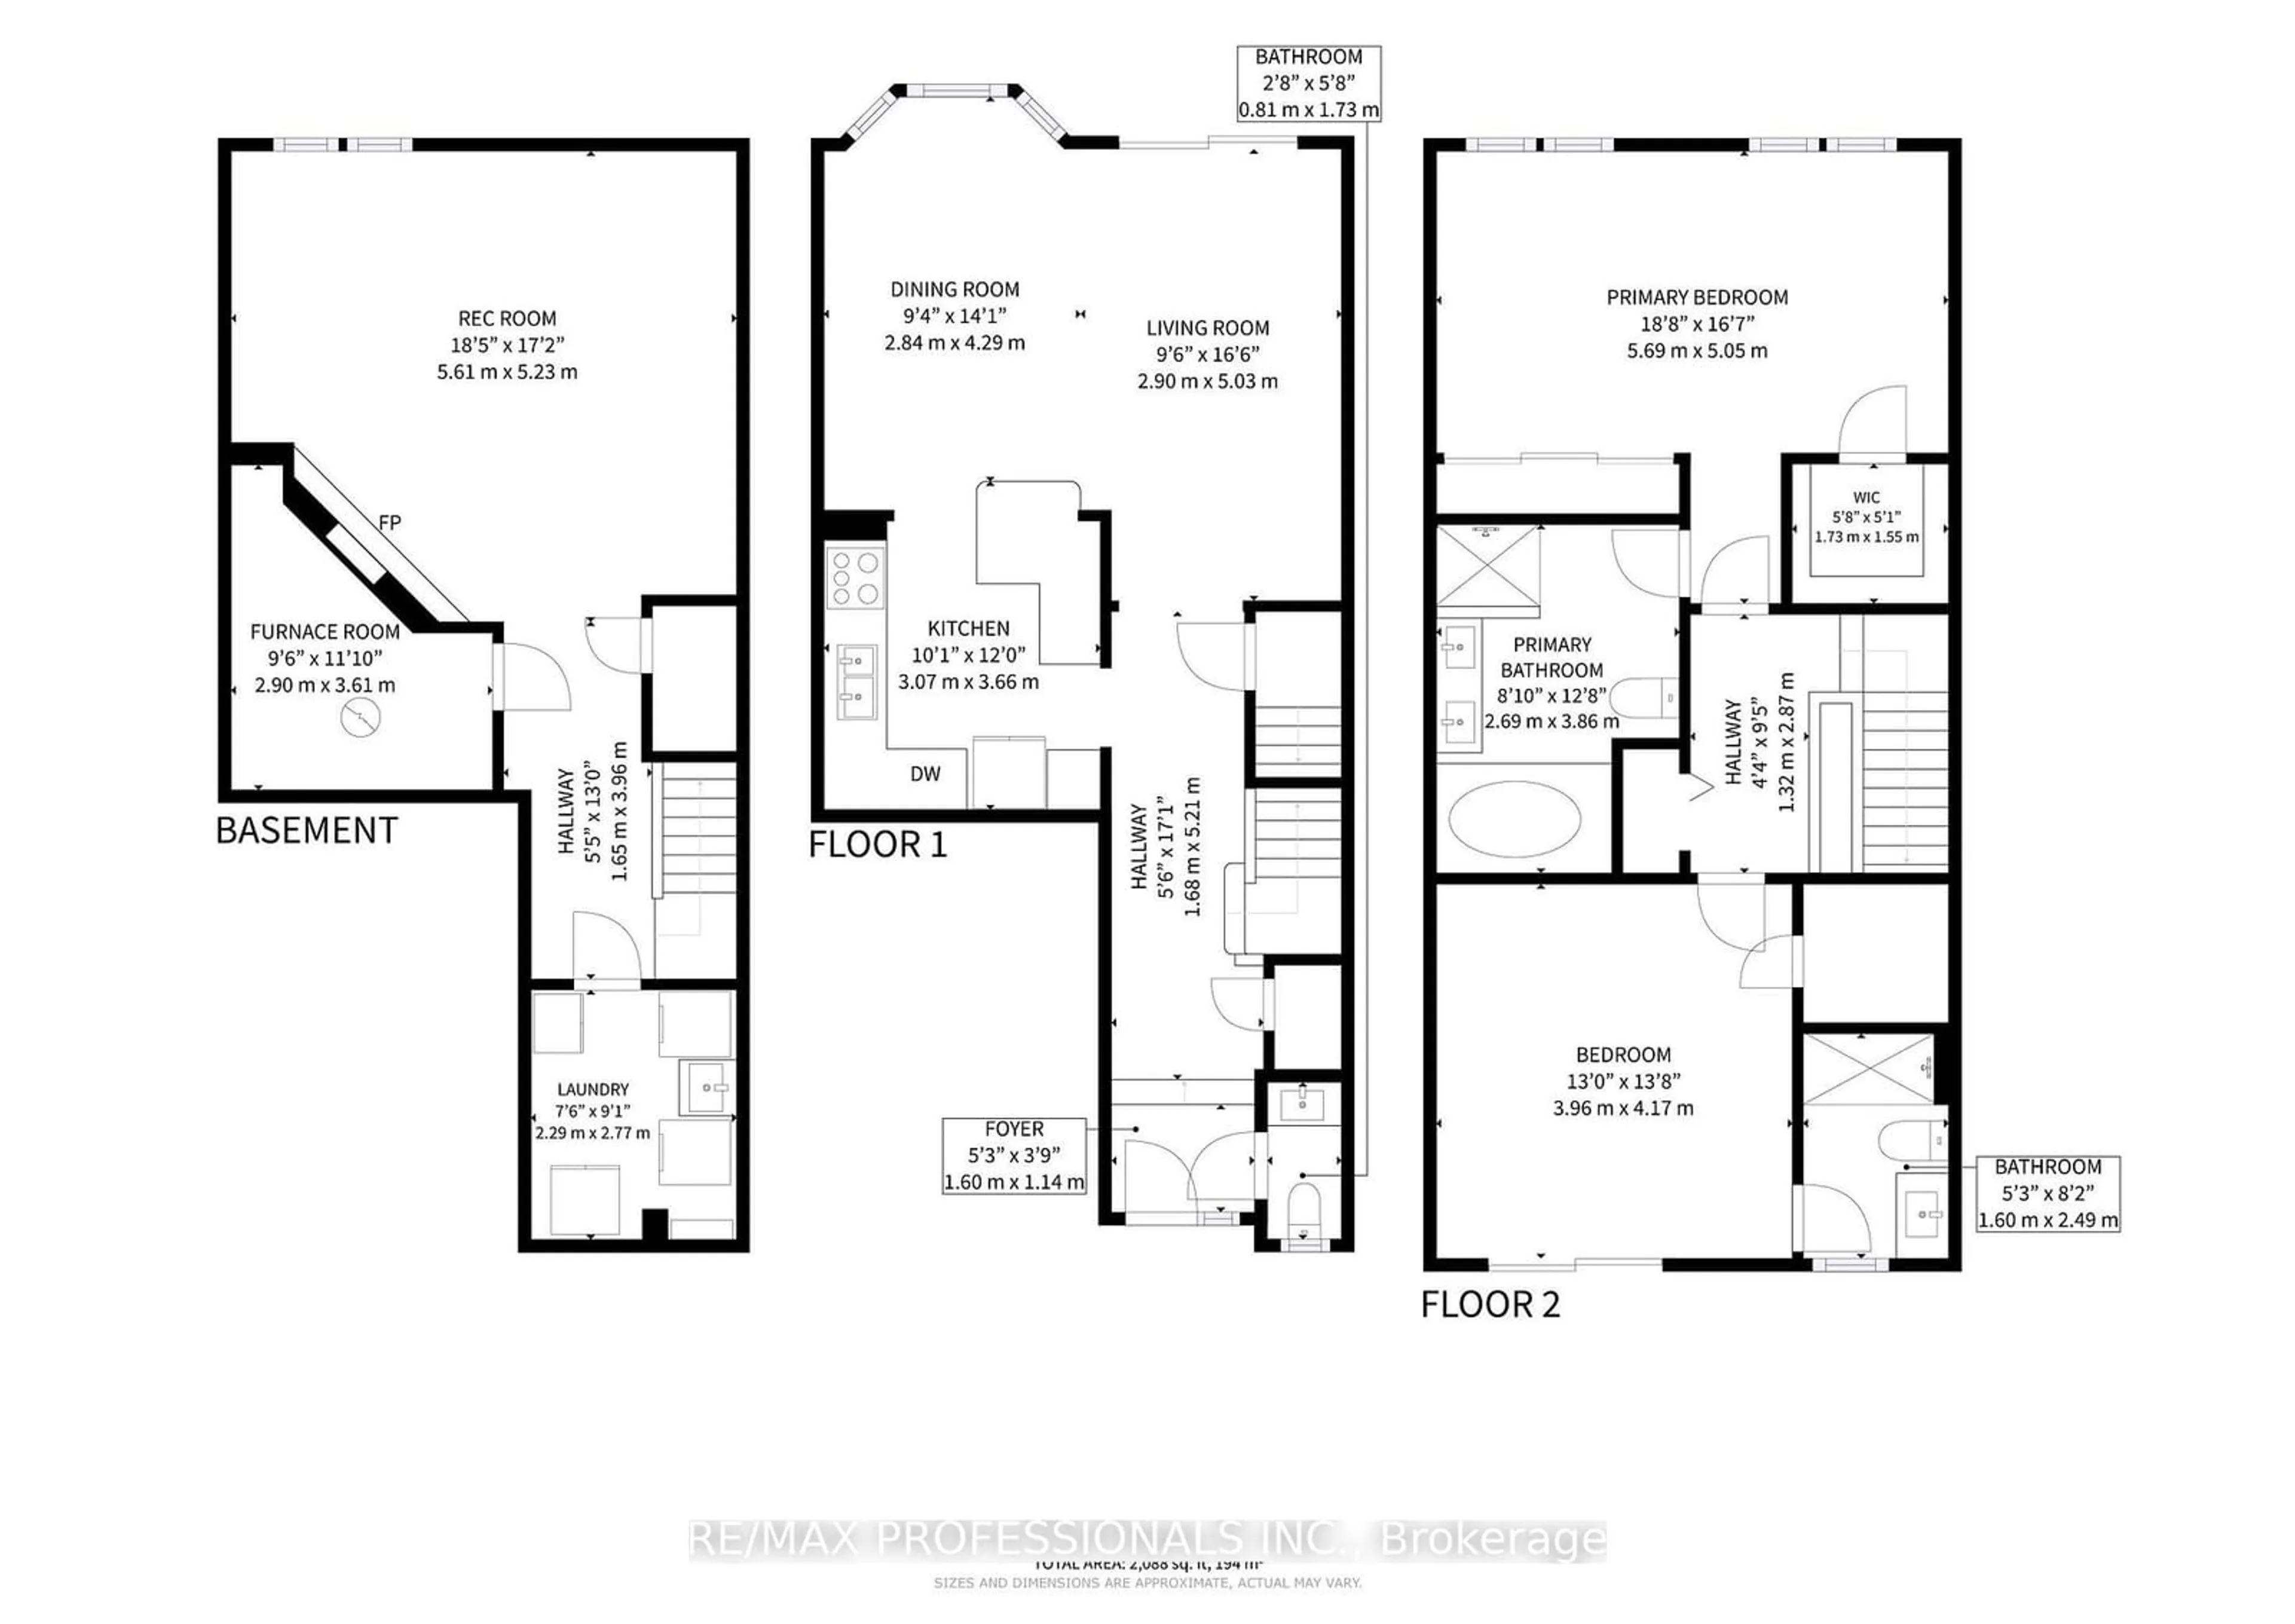 Floor plan for 14 Tamarack Circ #14, Toronto Ontario M9P 3T9